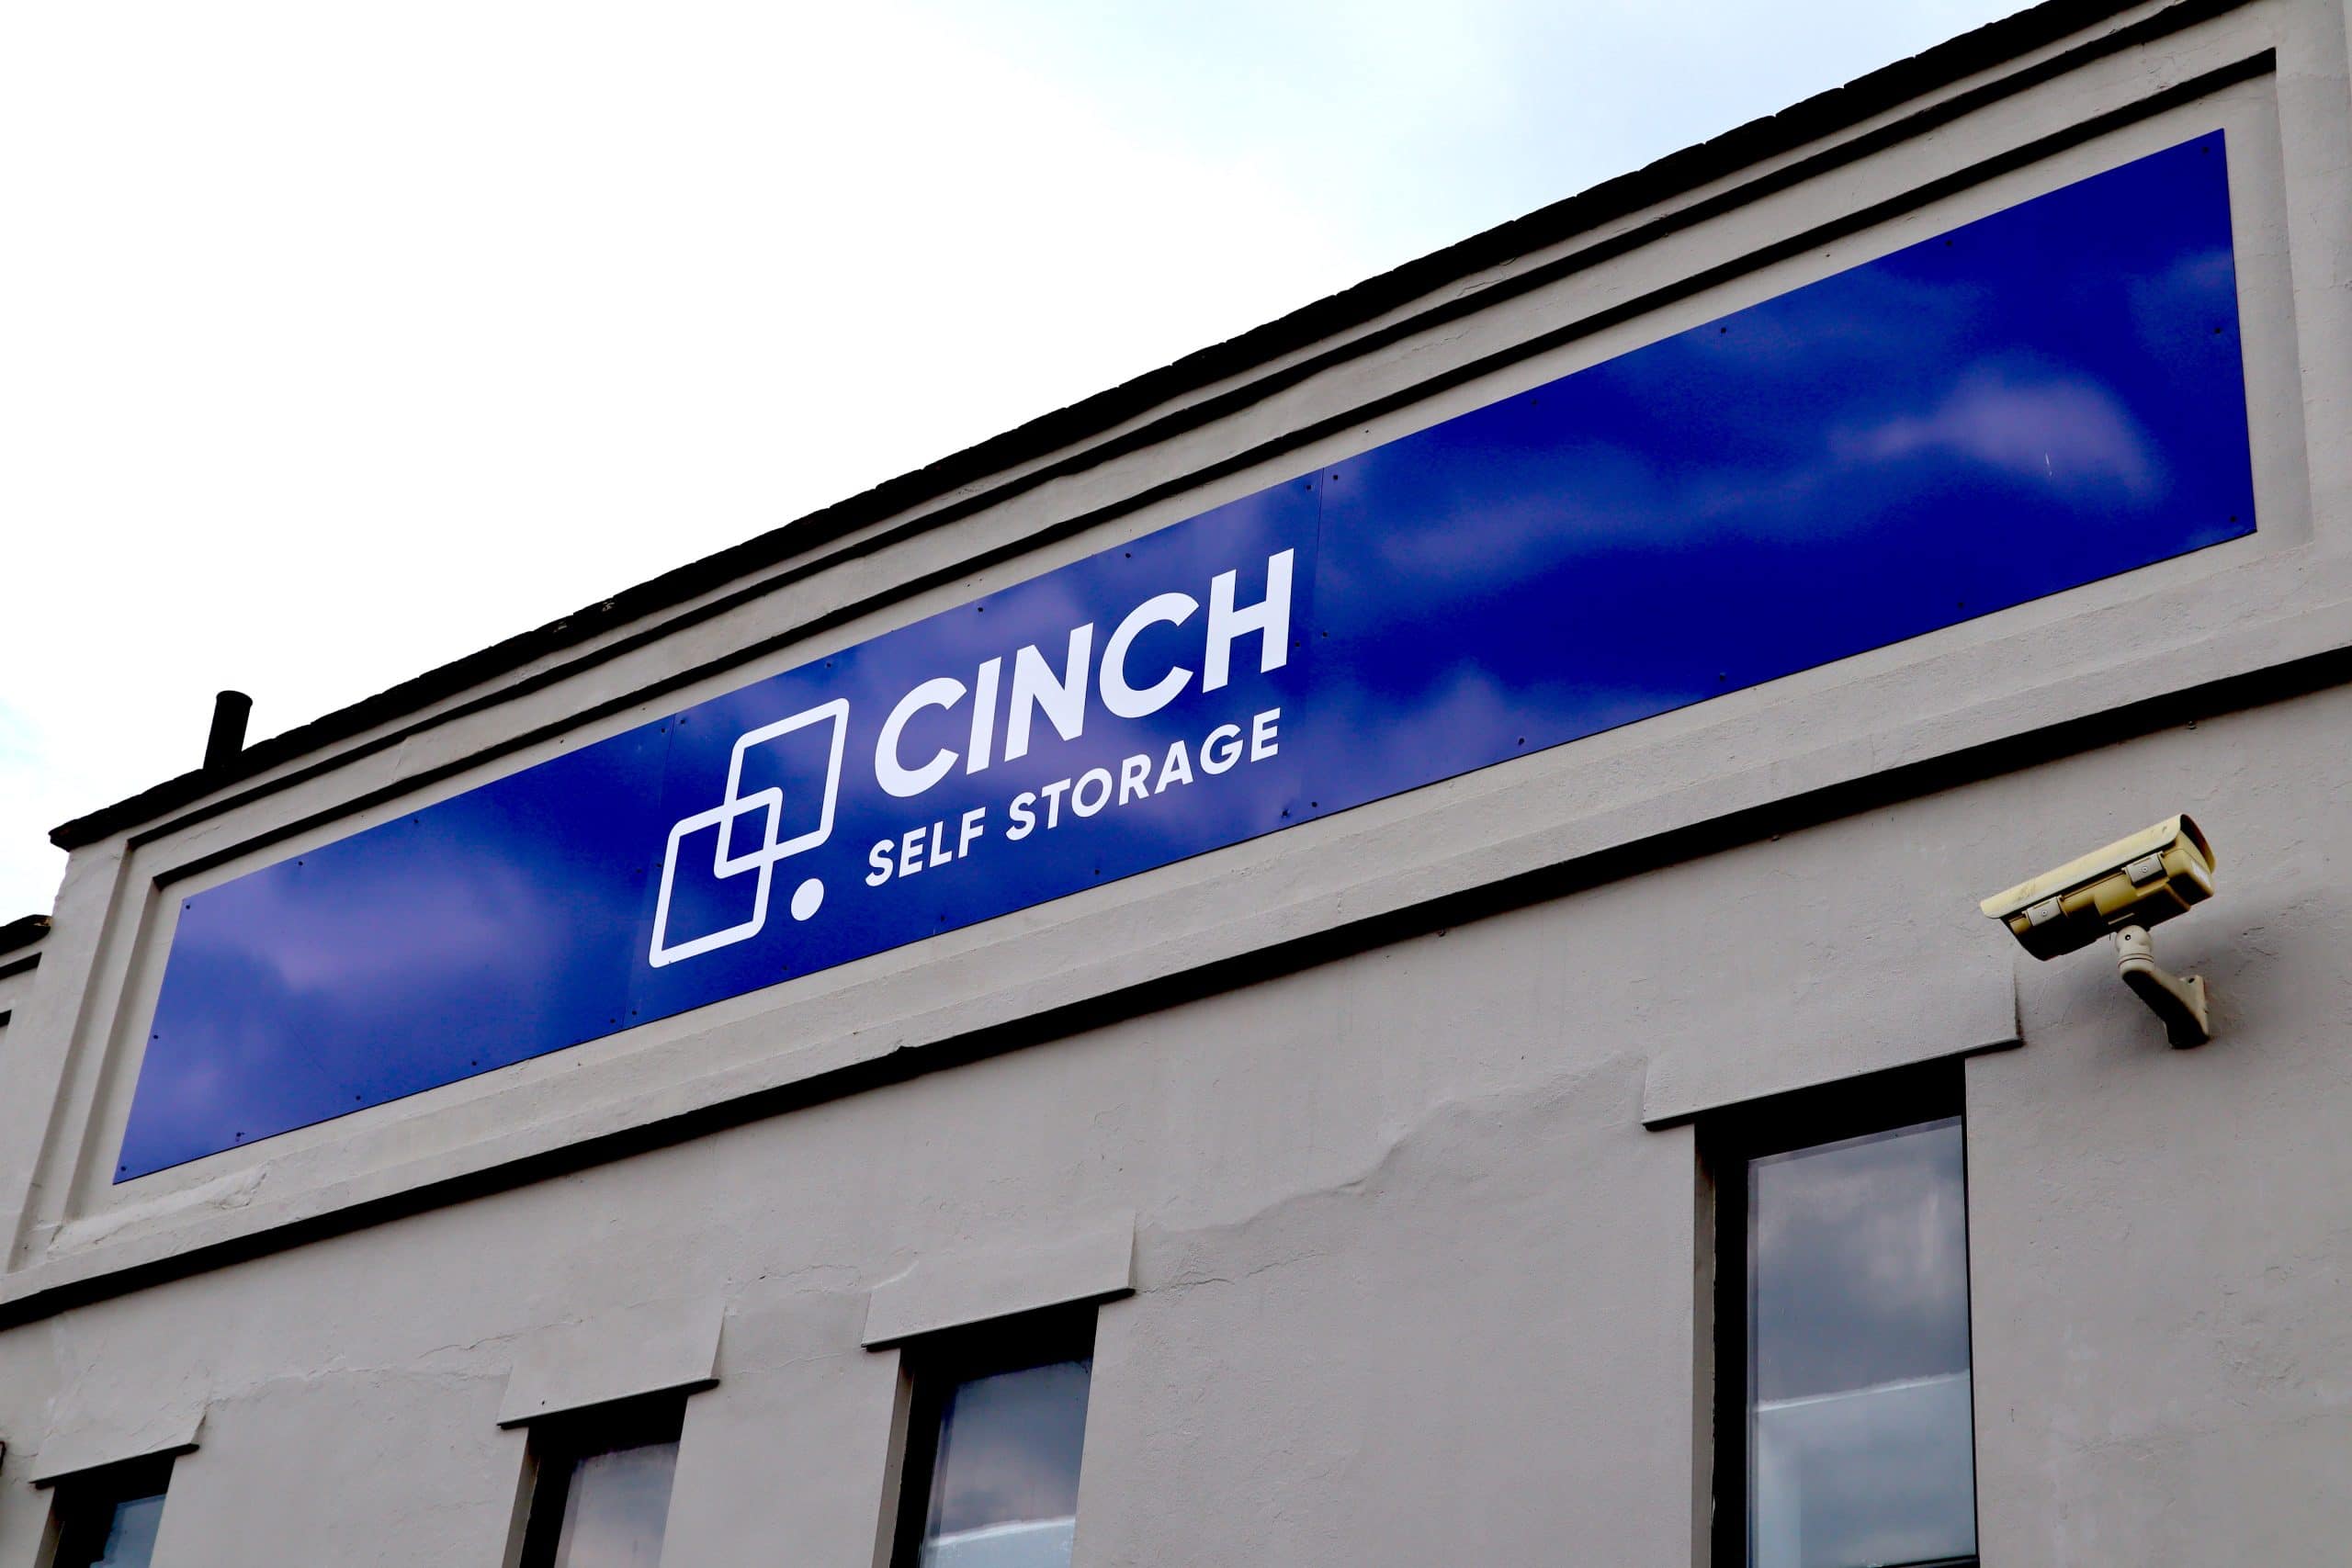 Cinch Self Storage Sign